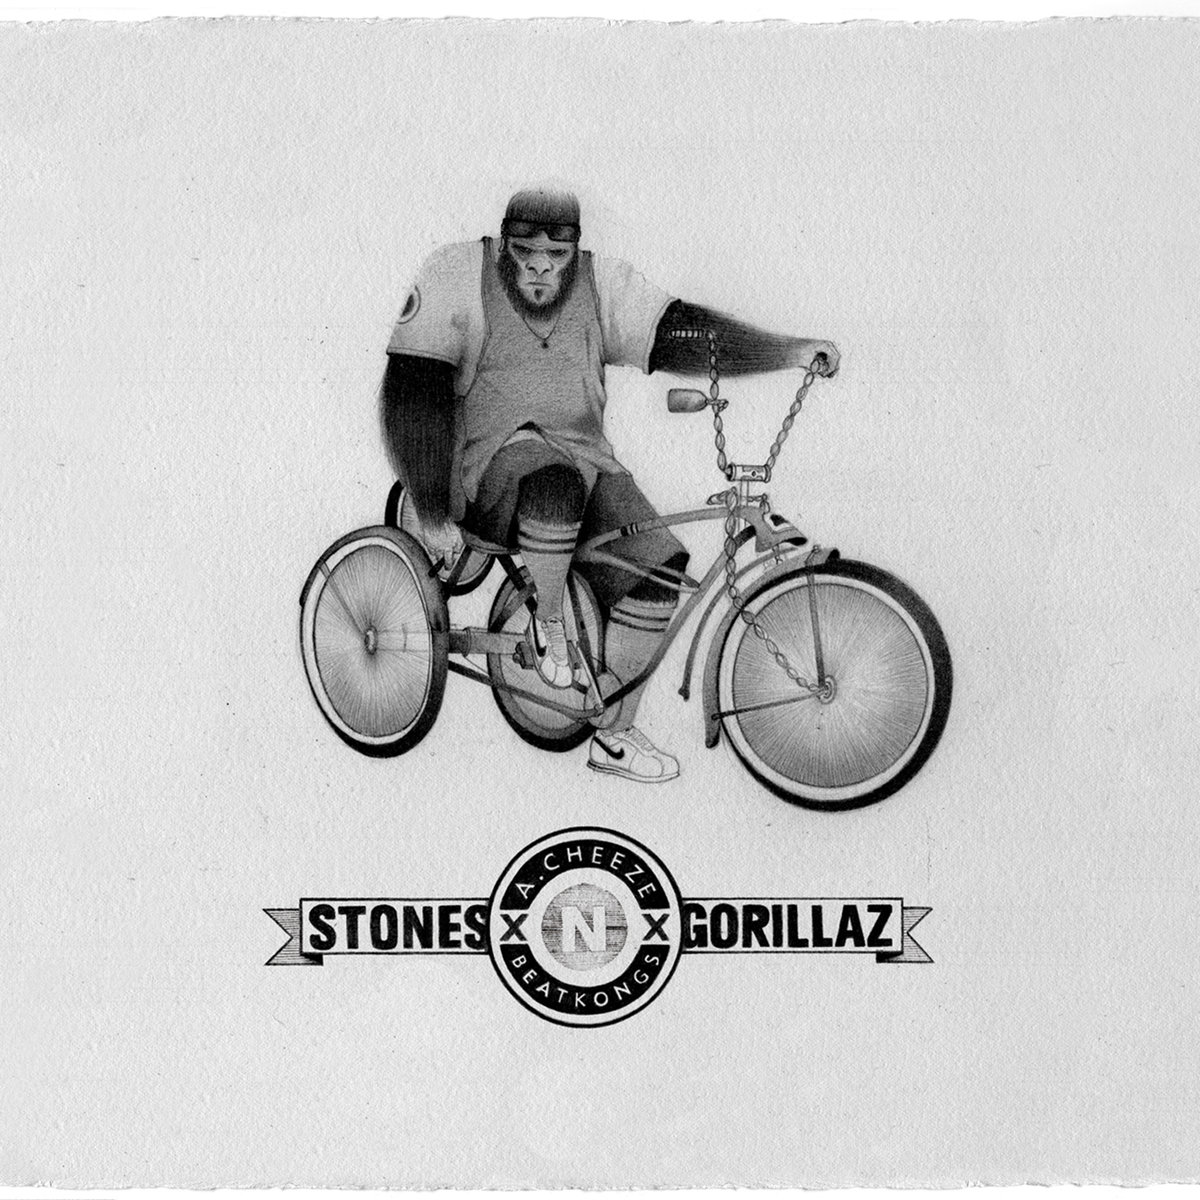 Stones_n__gorillaz